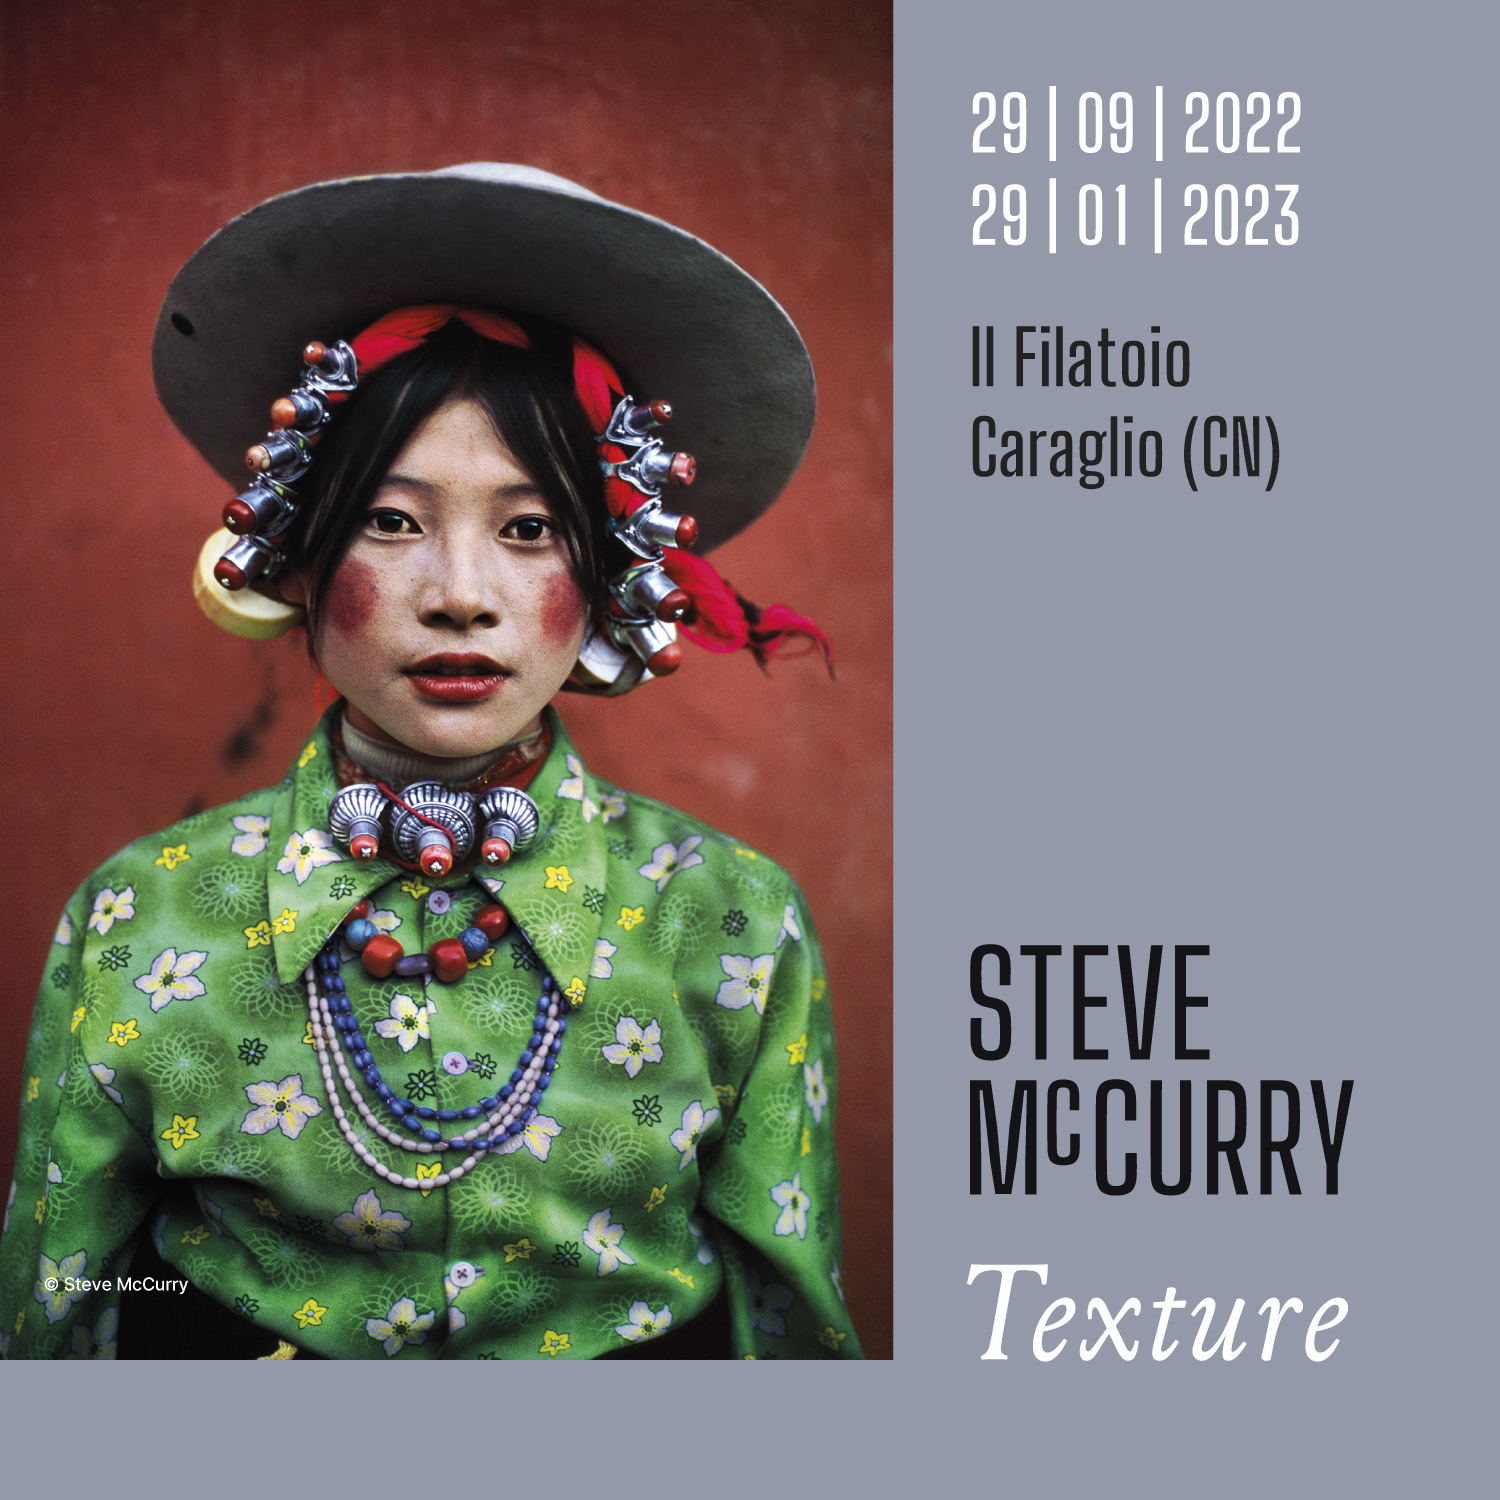 Mostra di Steve McCurry al Filatoio